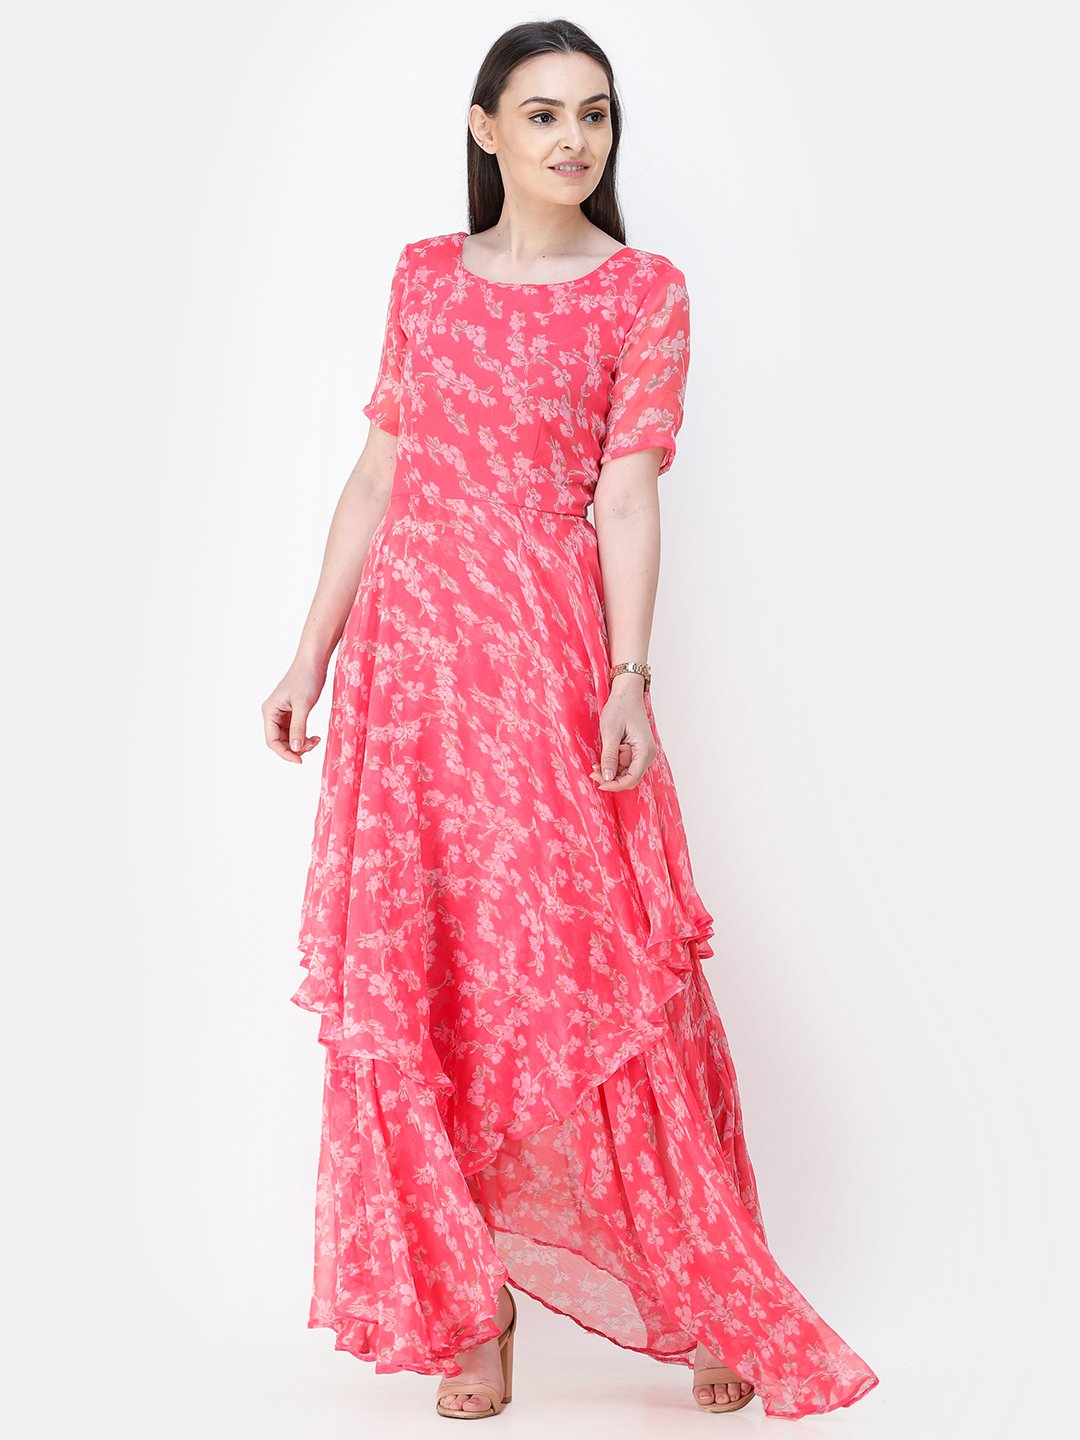 Scorpius pink floral frilled long dress